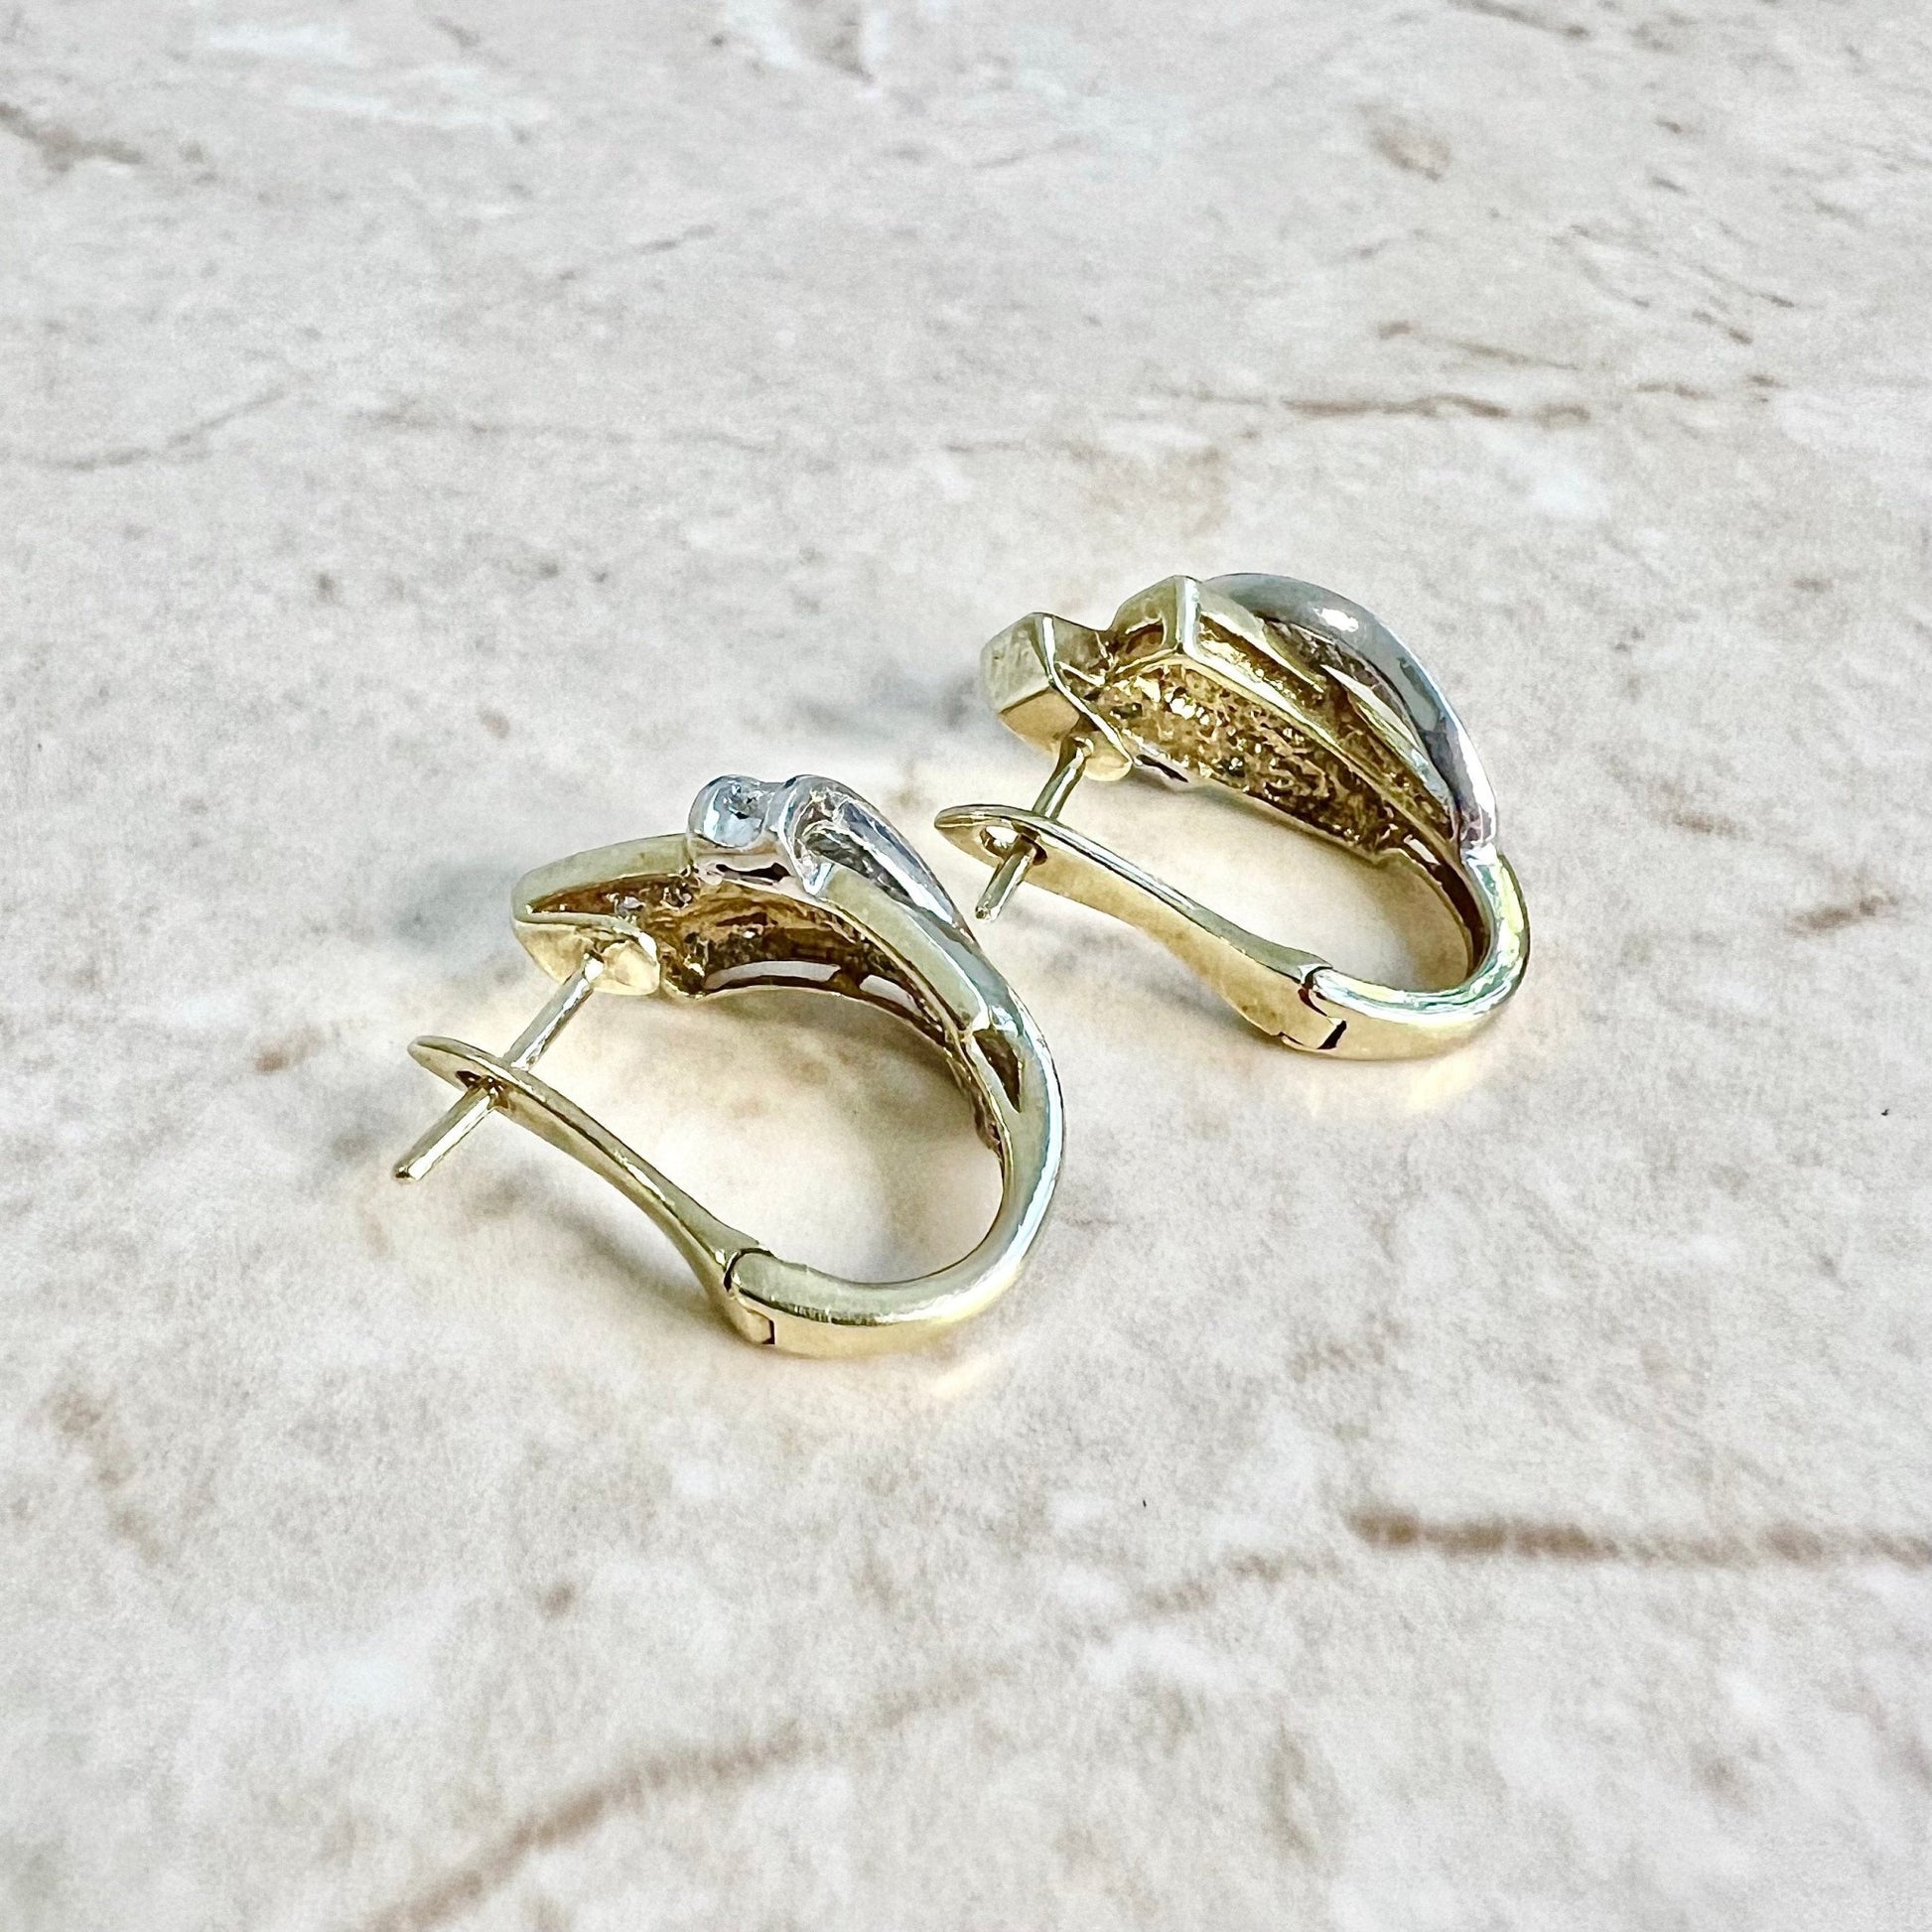 10K Diamond Huggie Hoop Earrings 0.30 CTTW - Two Tone Gold Diamond Earrings - Crossover Hoop Earrings - Huggie Earrings - Best Gifts For Her